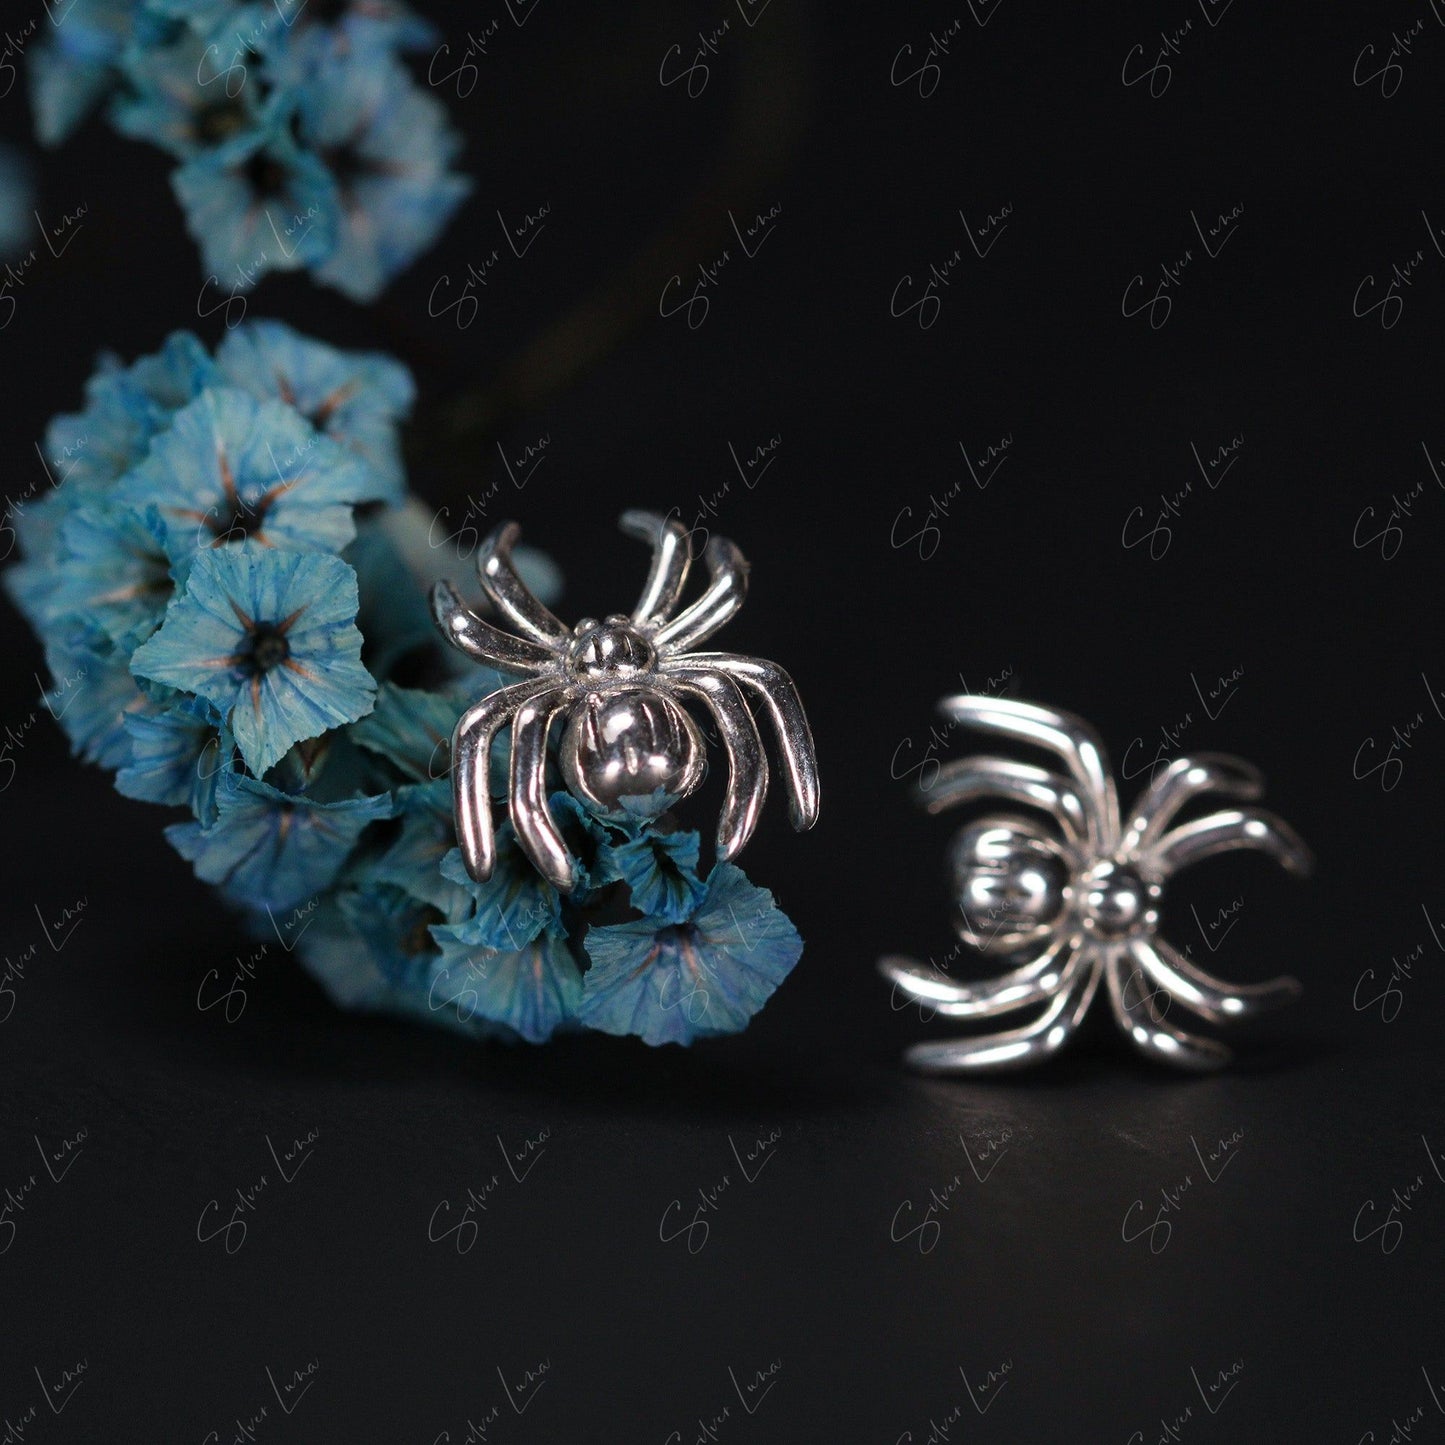 Sterling silver spider stud earrings